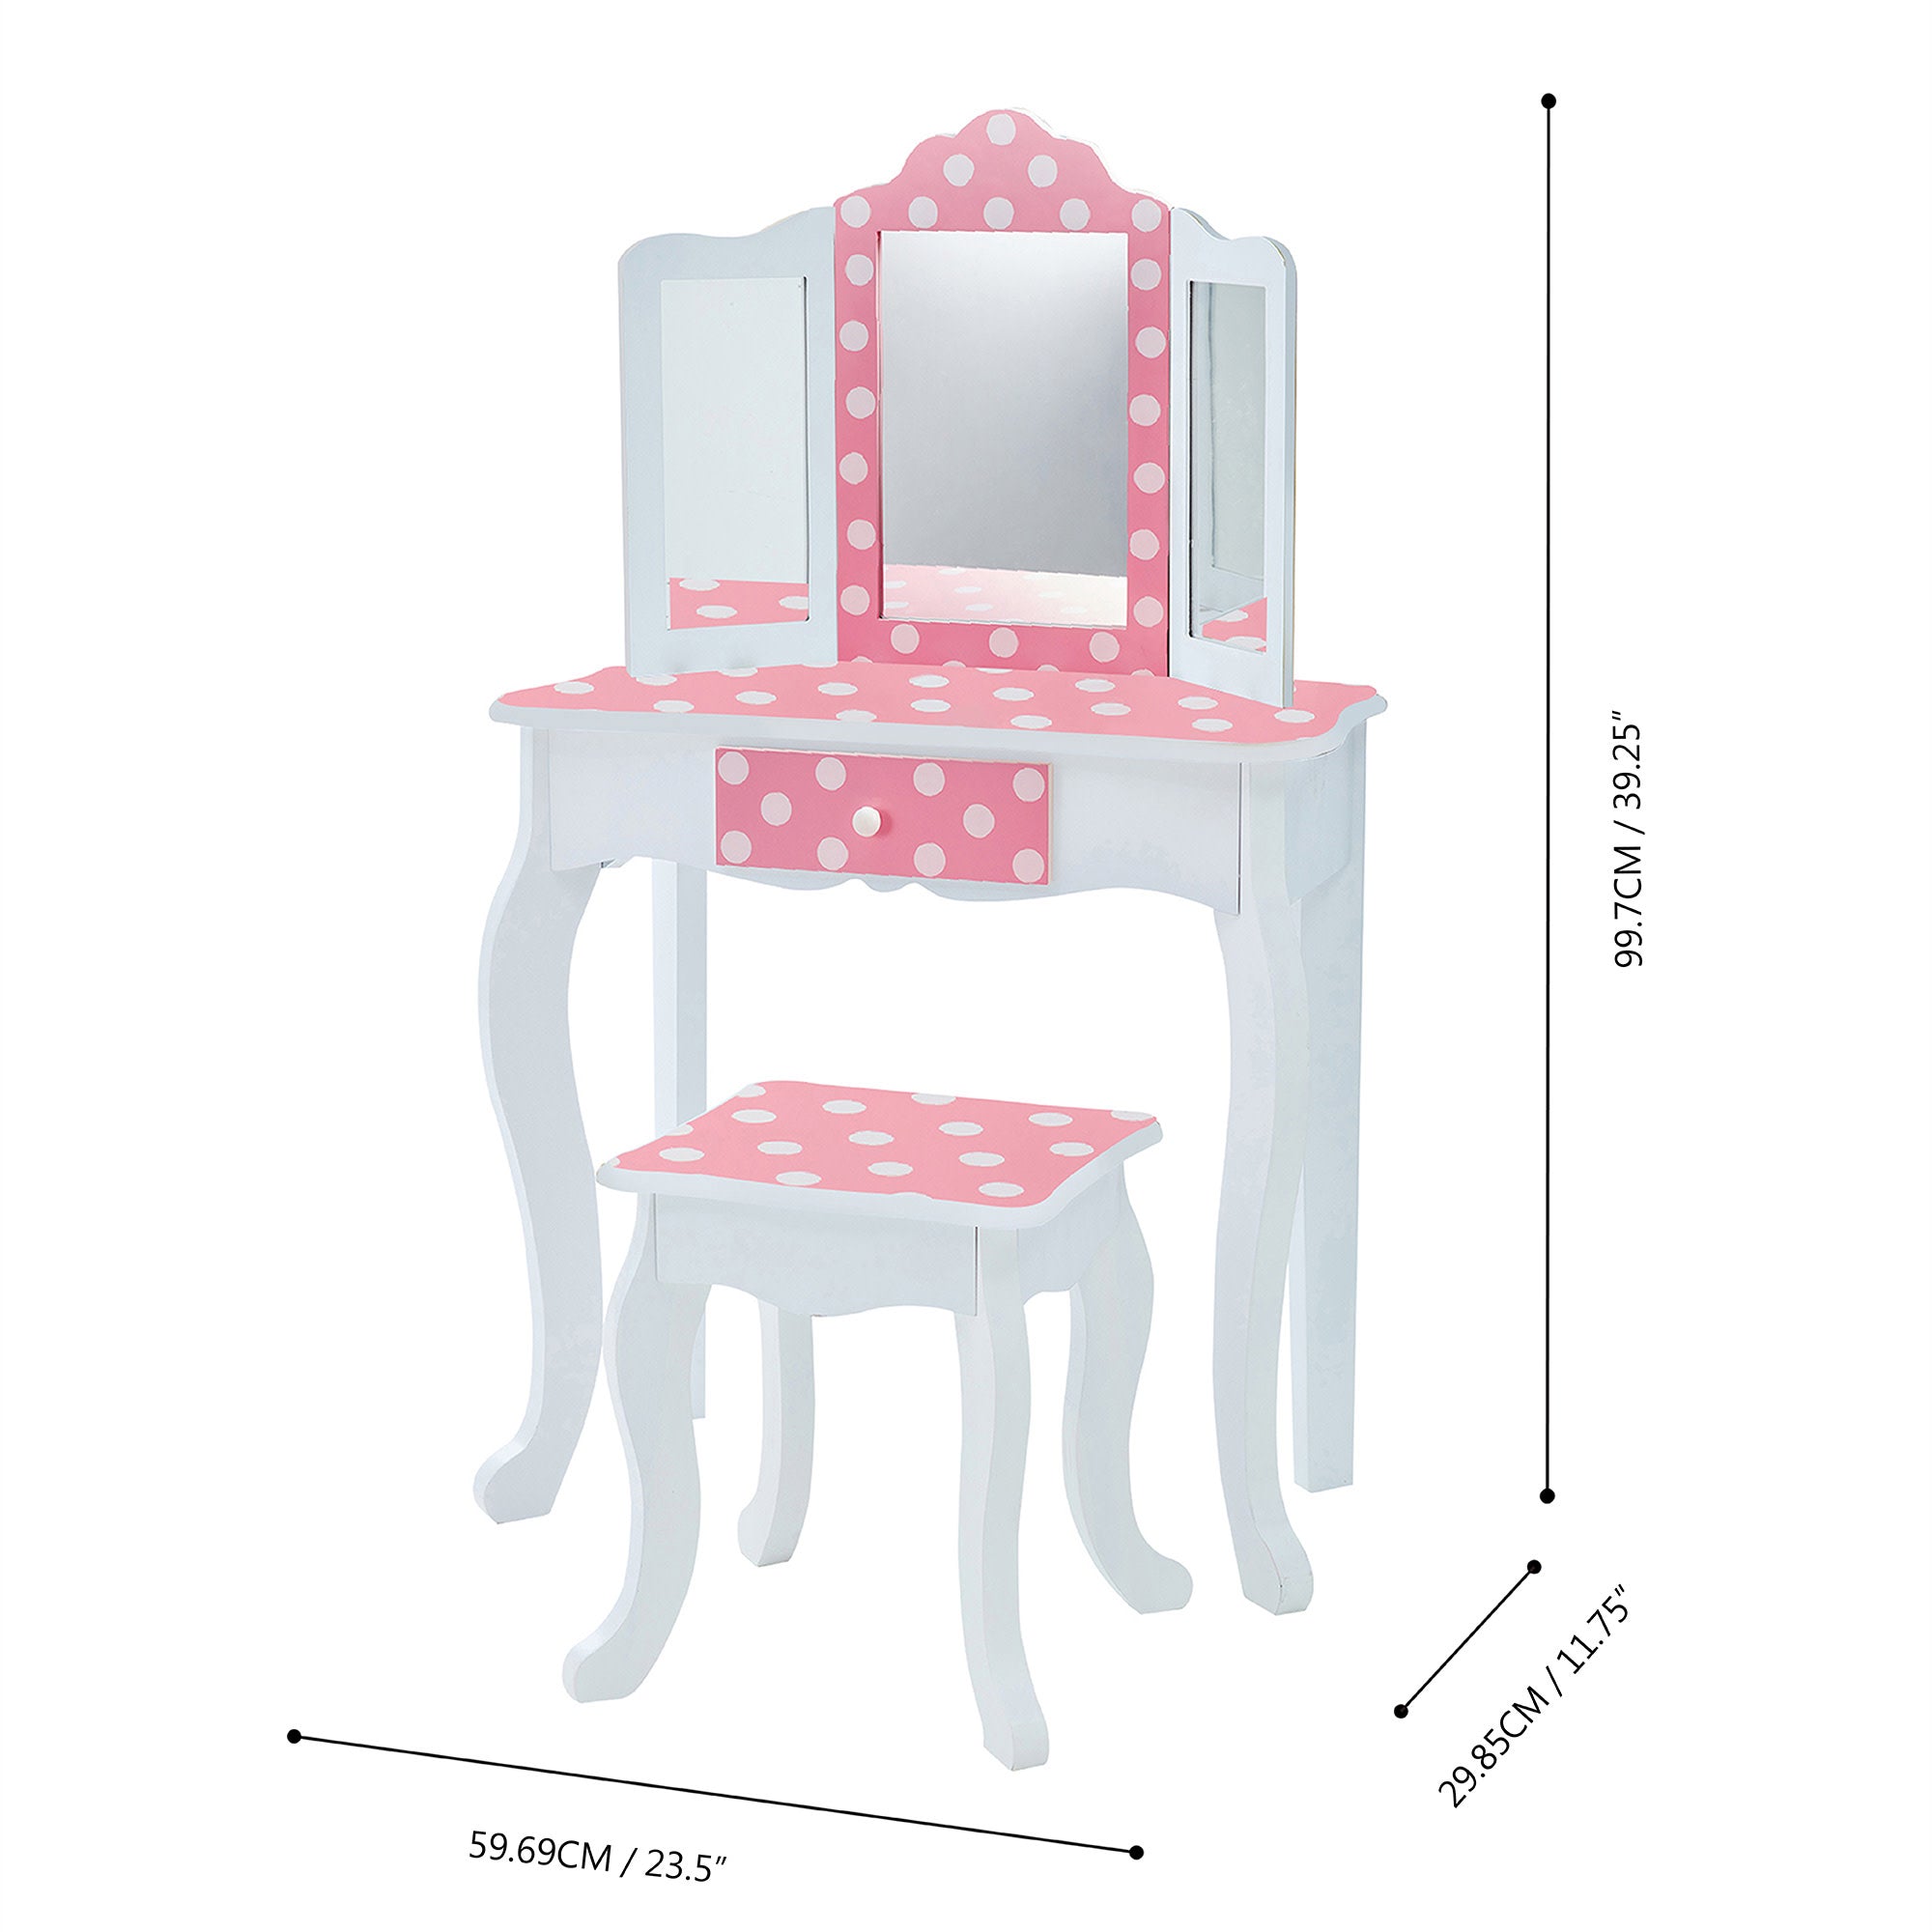 Teamson Kids Gisele Polka Dot Vanity Set with Tri-Fold Mirror, Pink/White